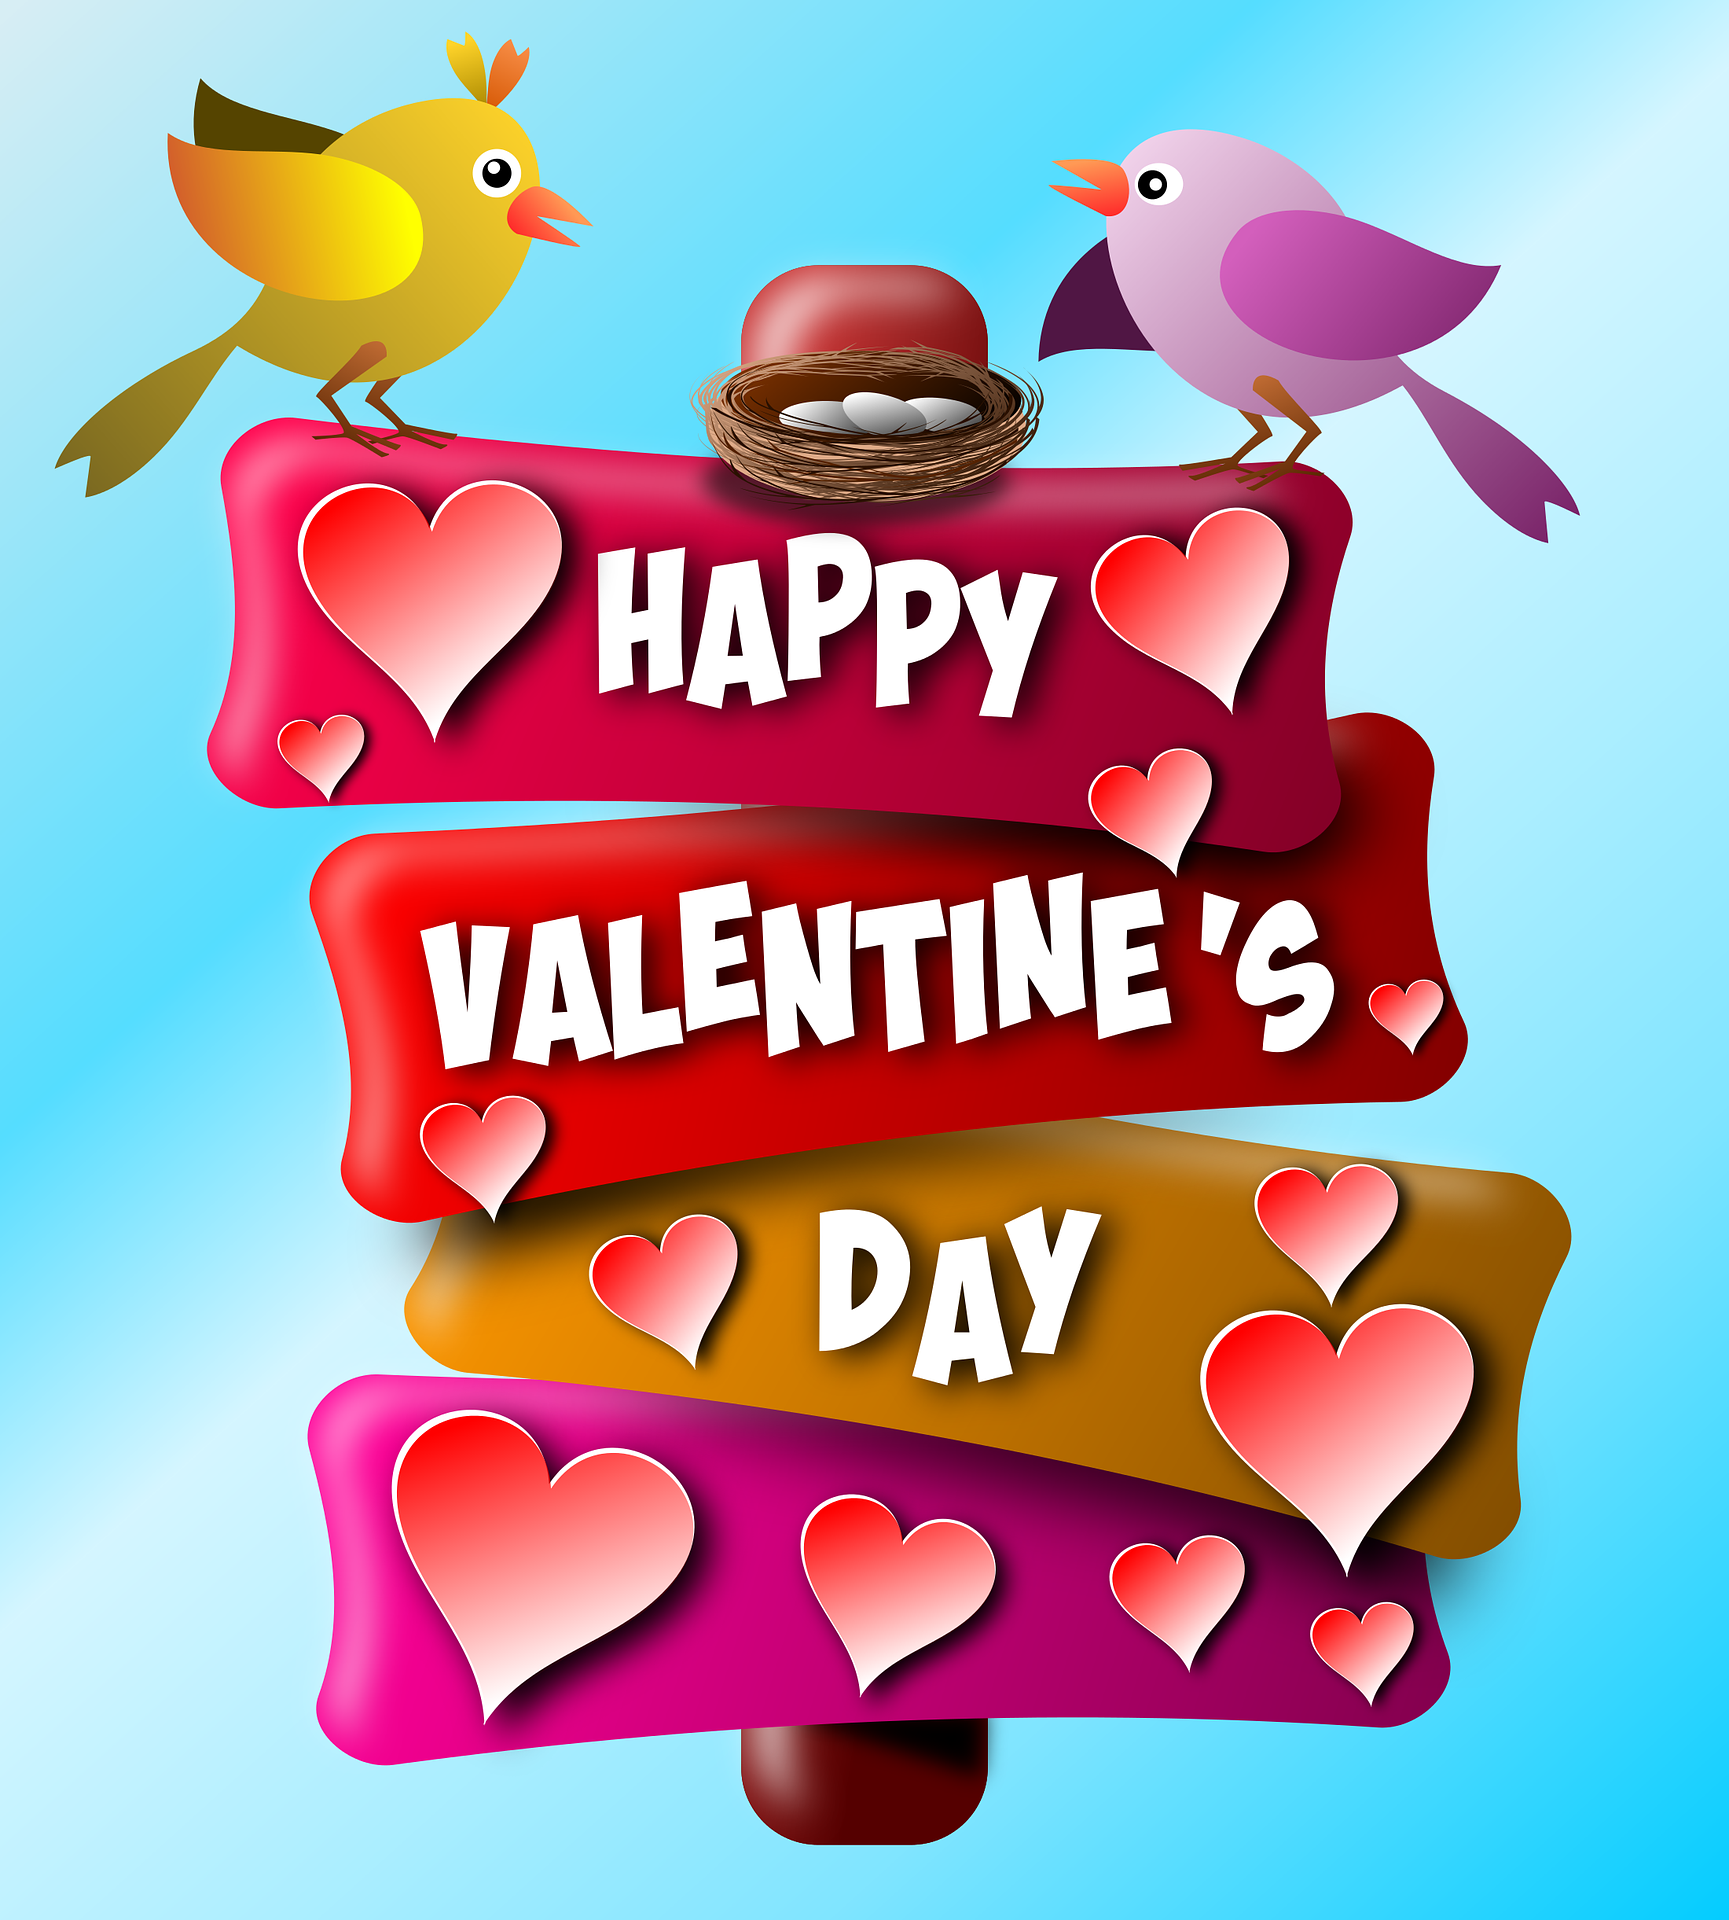 Have a valentine s day. Счастливого дня влюбленных. Happy Valentine's Day картинки.